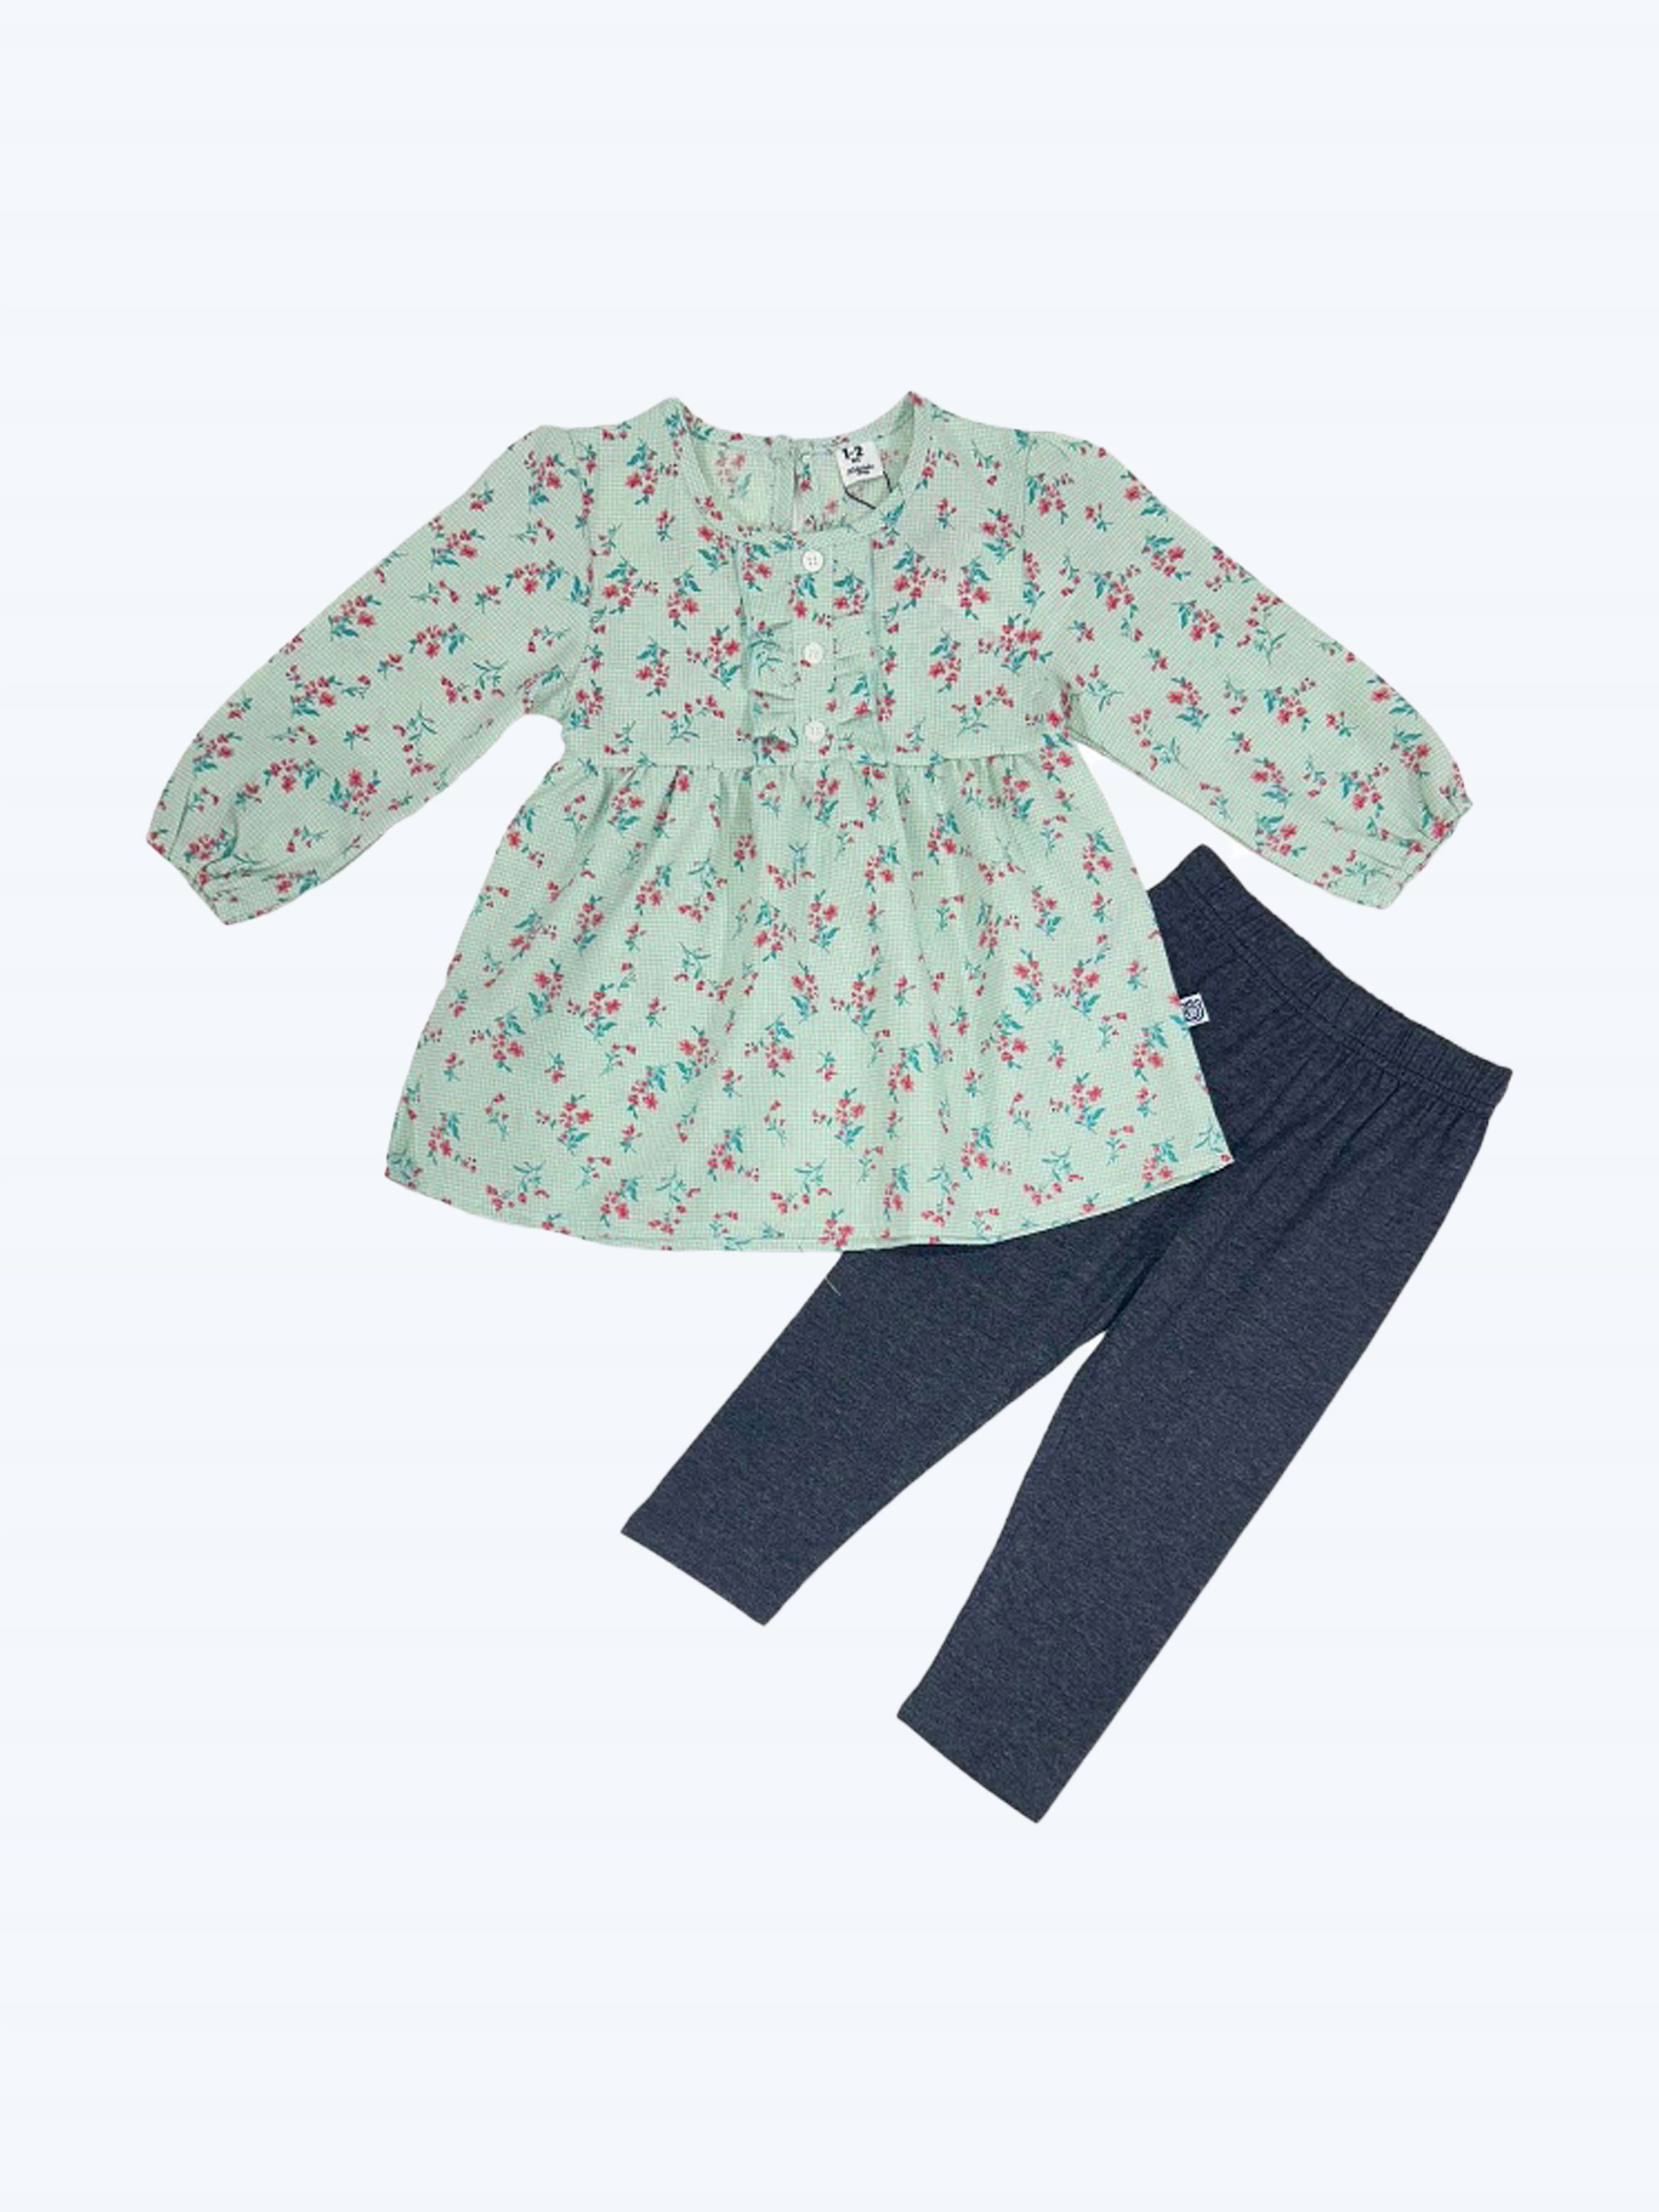 Kikilala Toddler Fashion Girl suit Set GSB346-KIKILALA